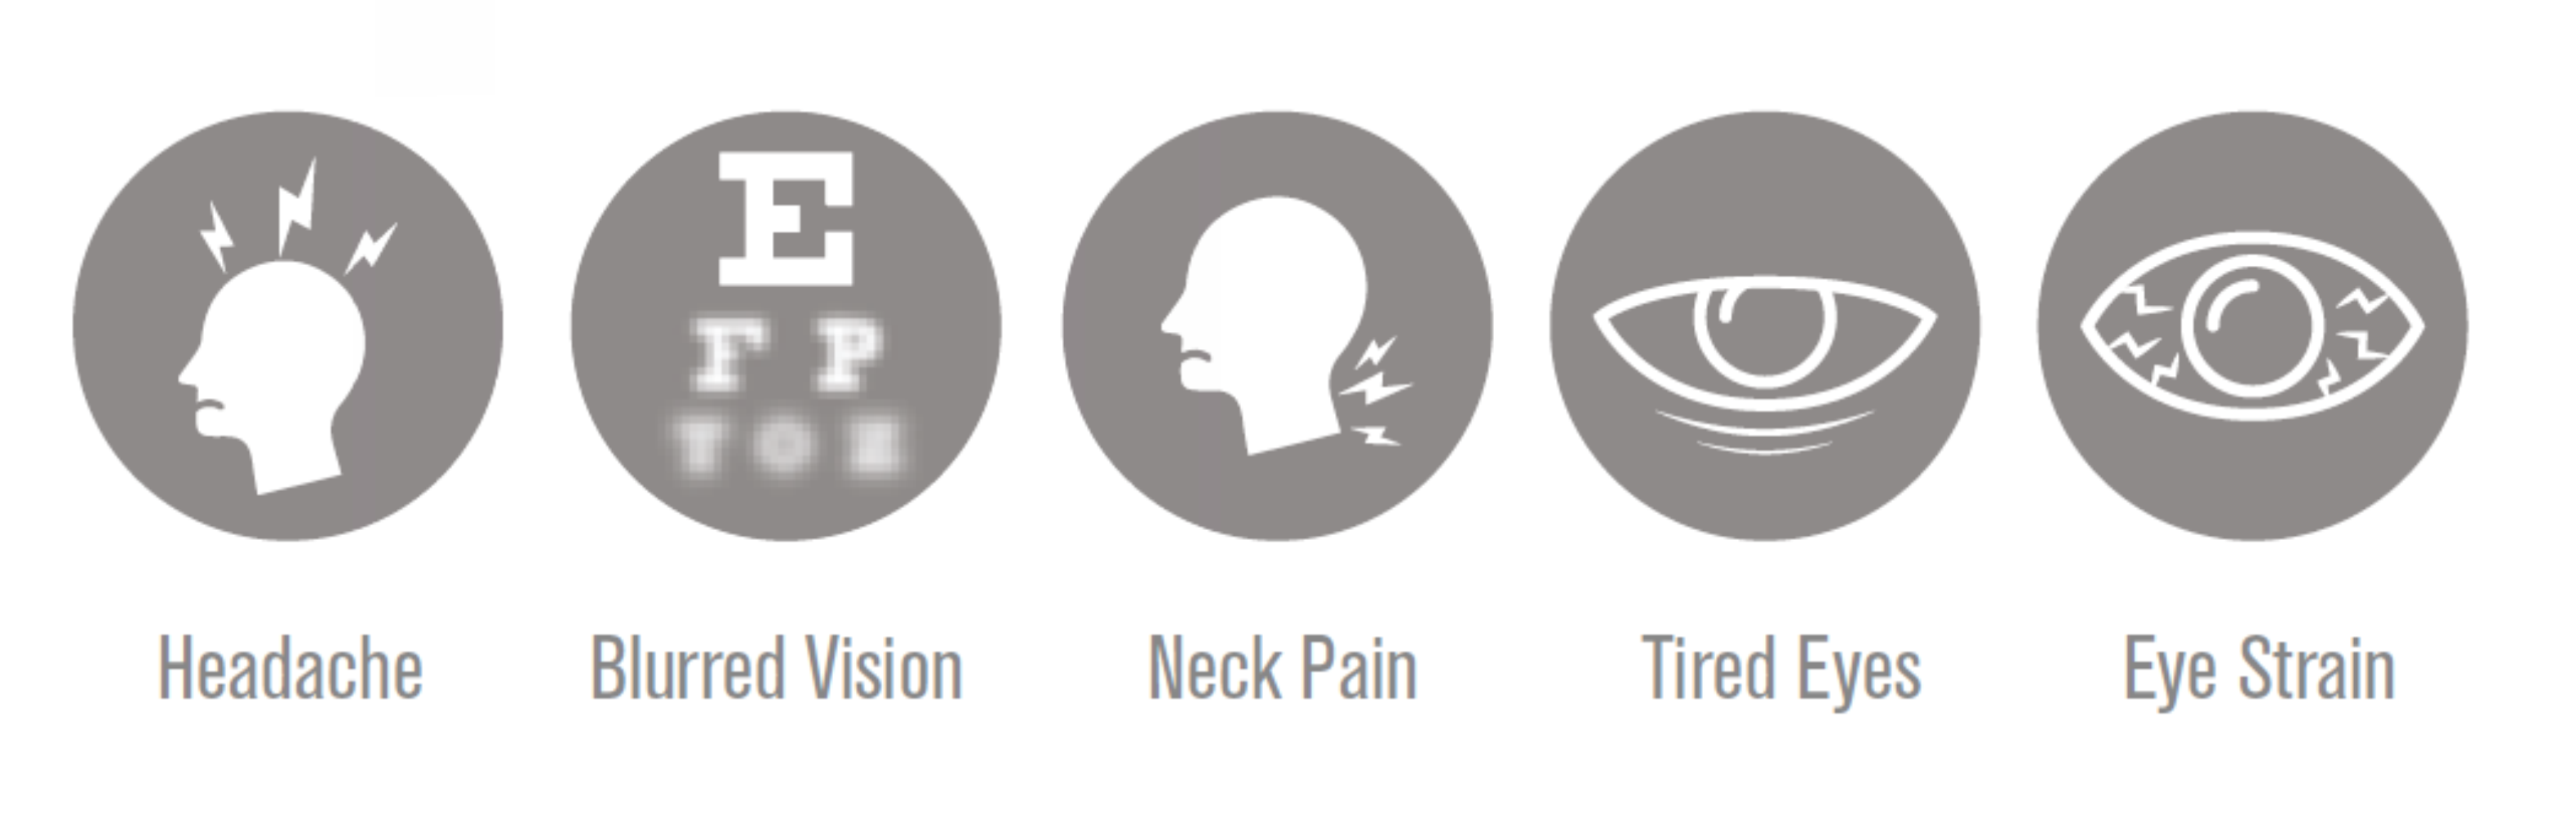 Symptoms of Digital Eye Strain